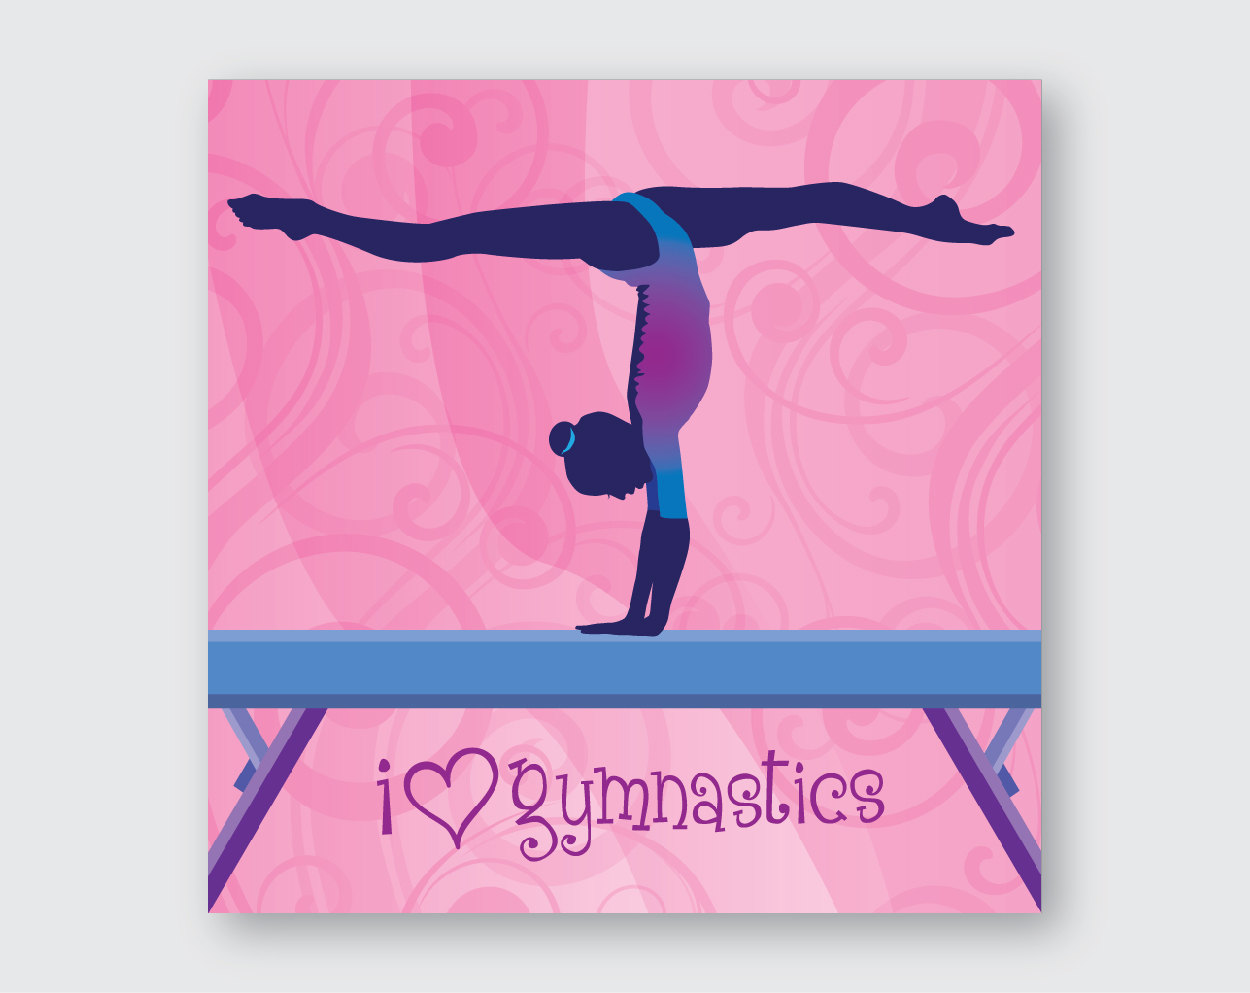 44+] Gymnastics Wallpaper for Rooms - WallpaperSafari